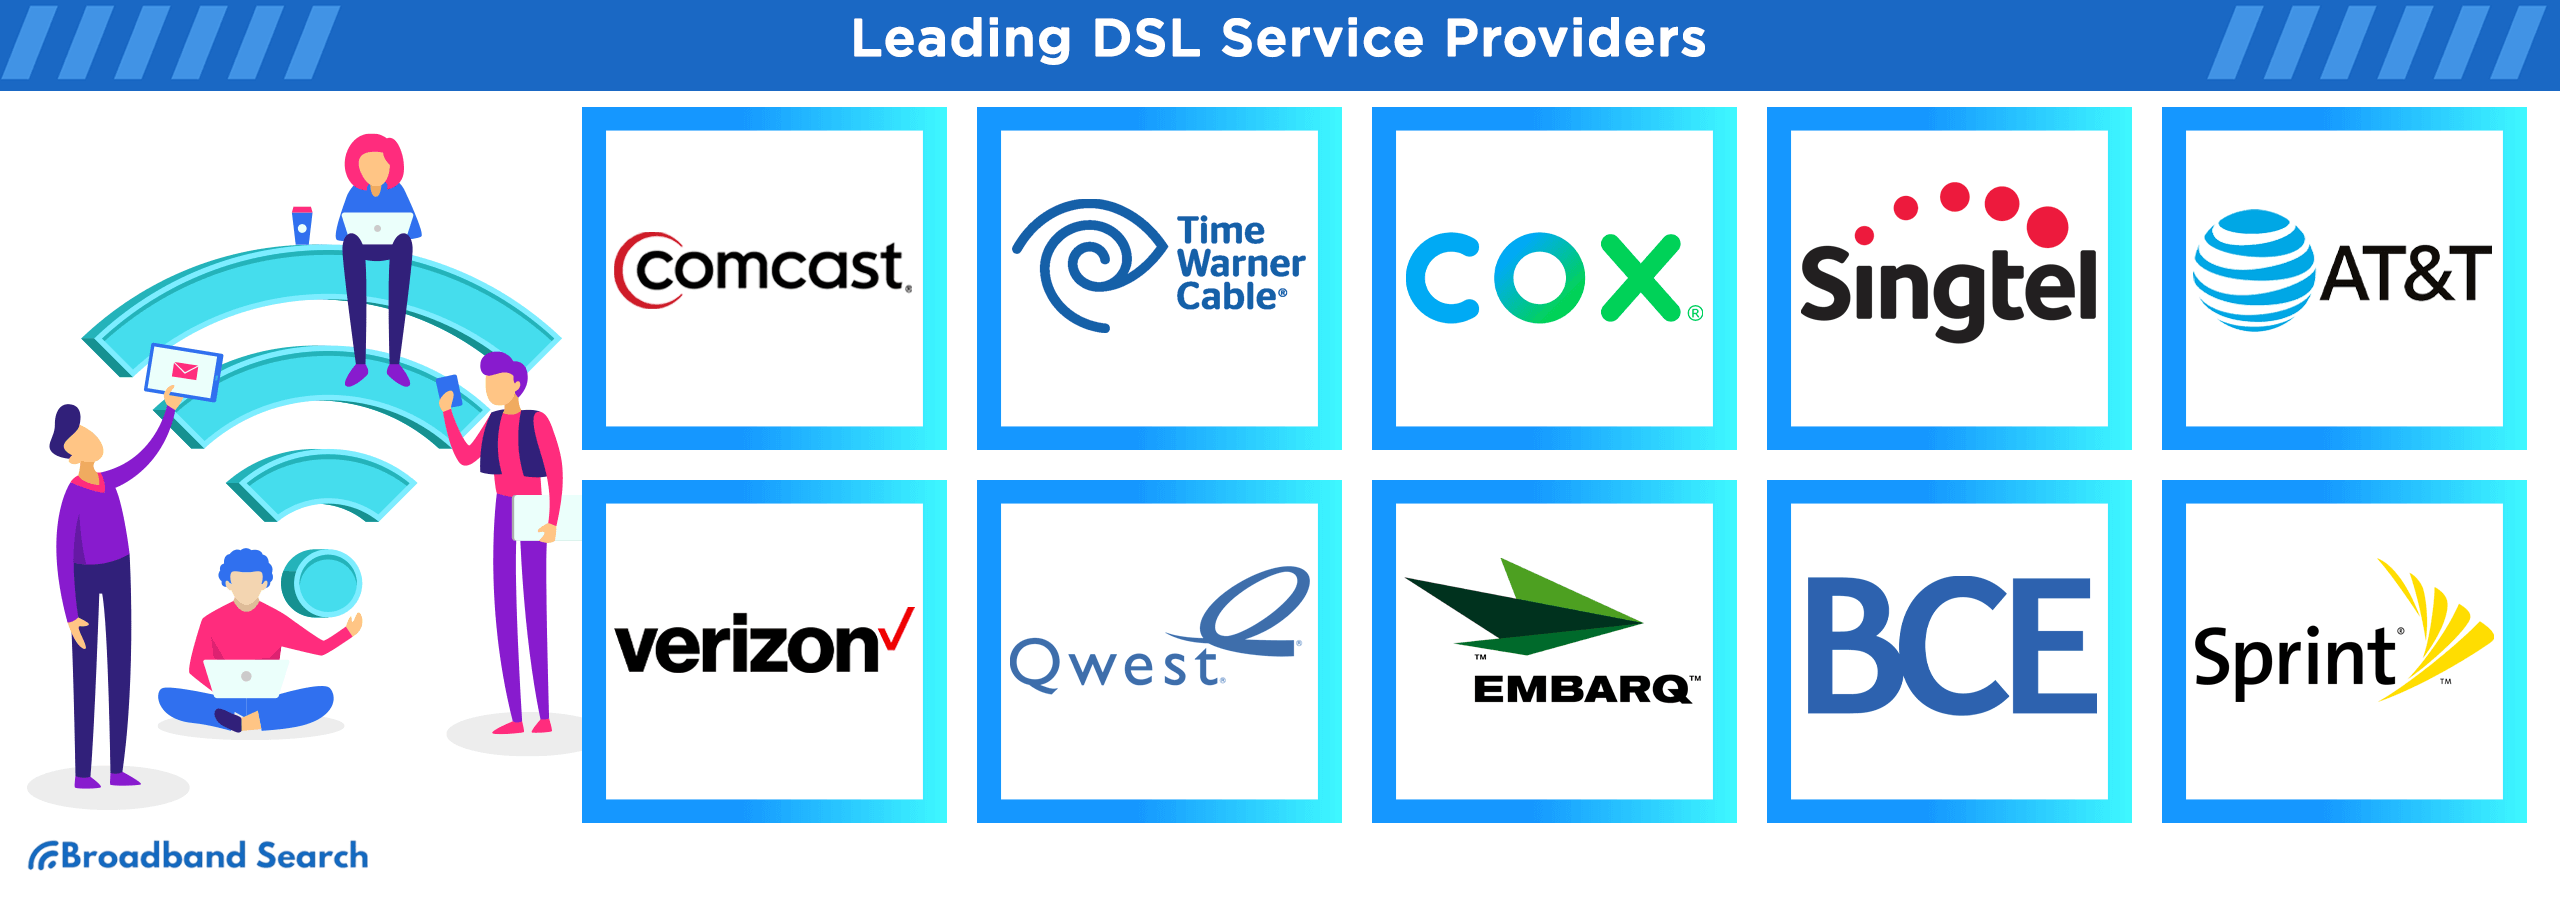 Leading DSL service providers